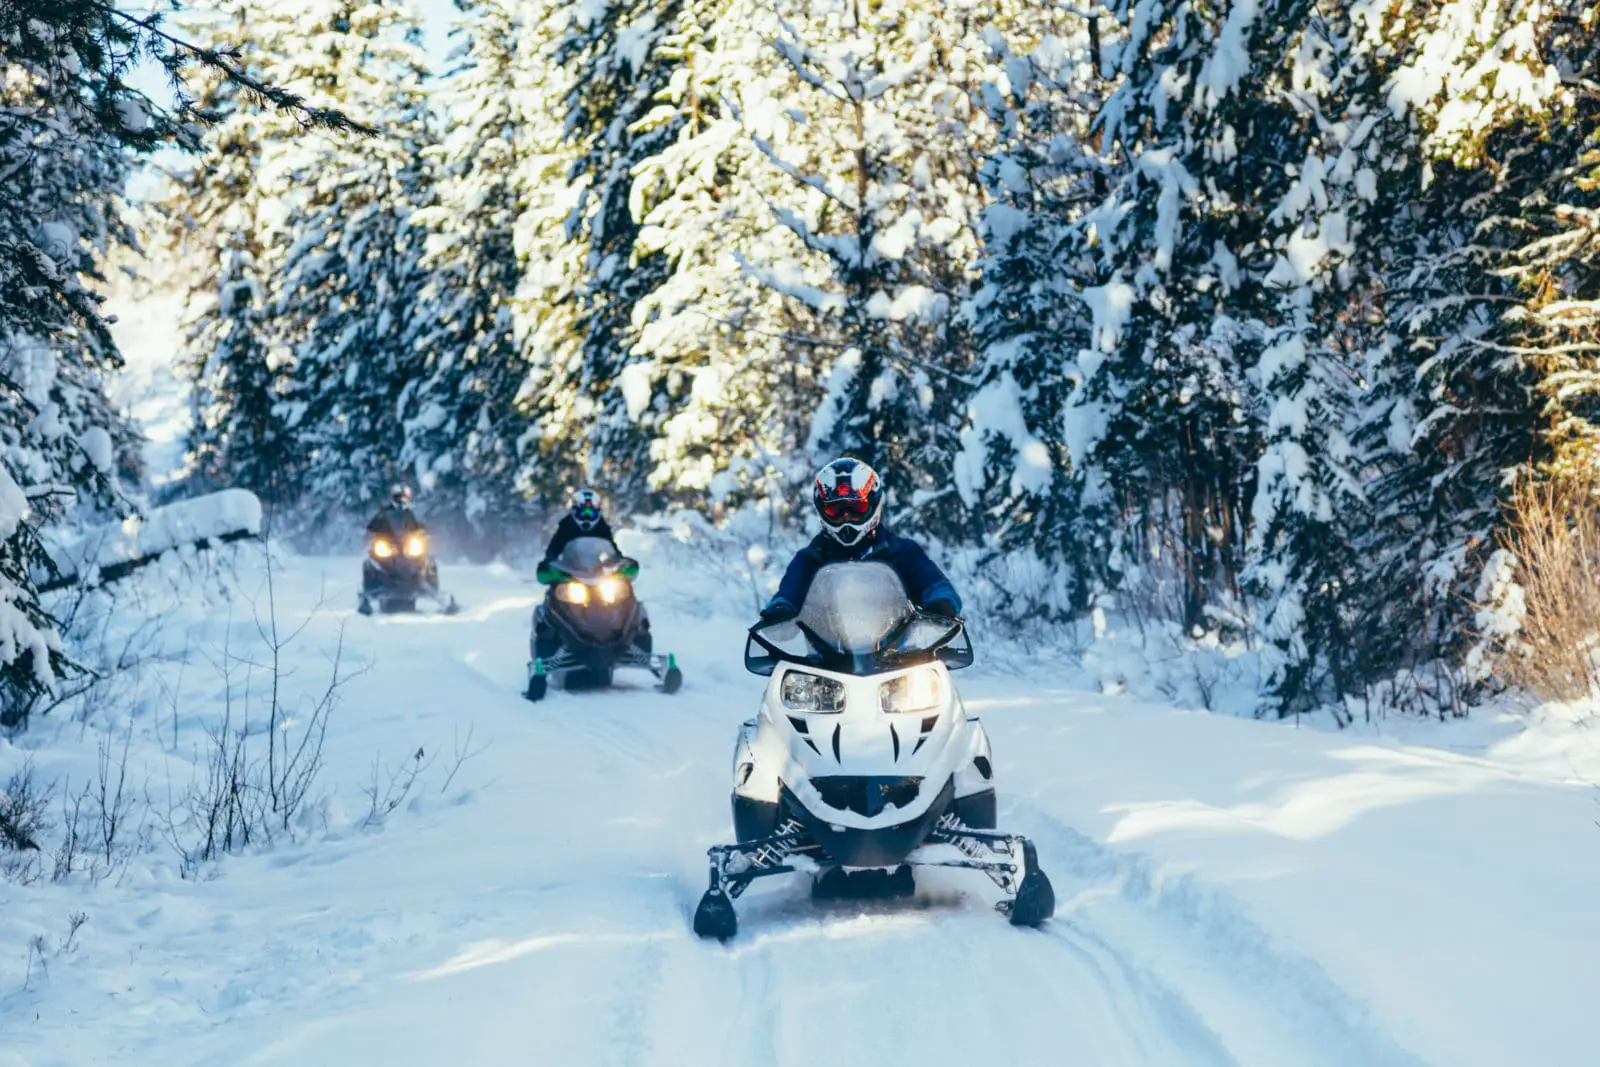 Snowmobiling through the snowy forest in Kelowna - Photo: Big White Ski Resort